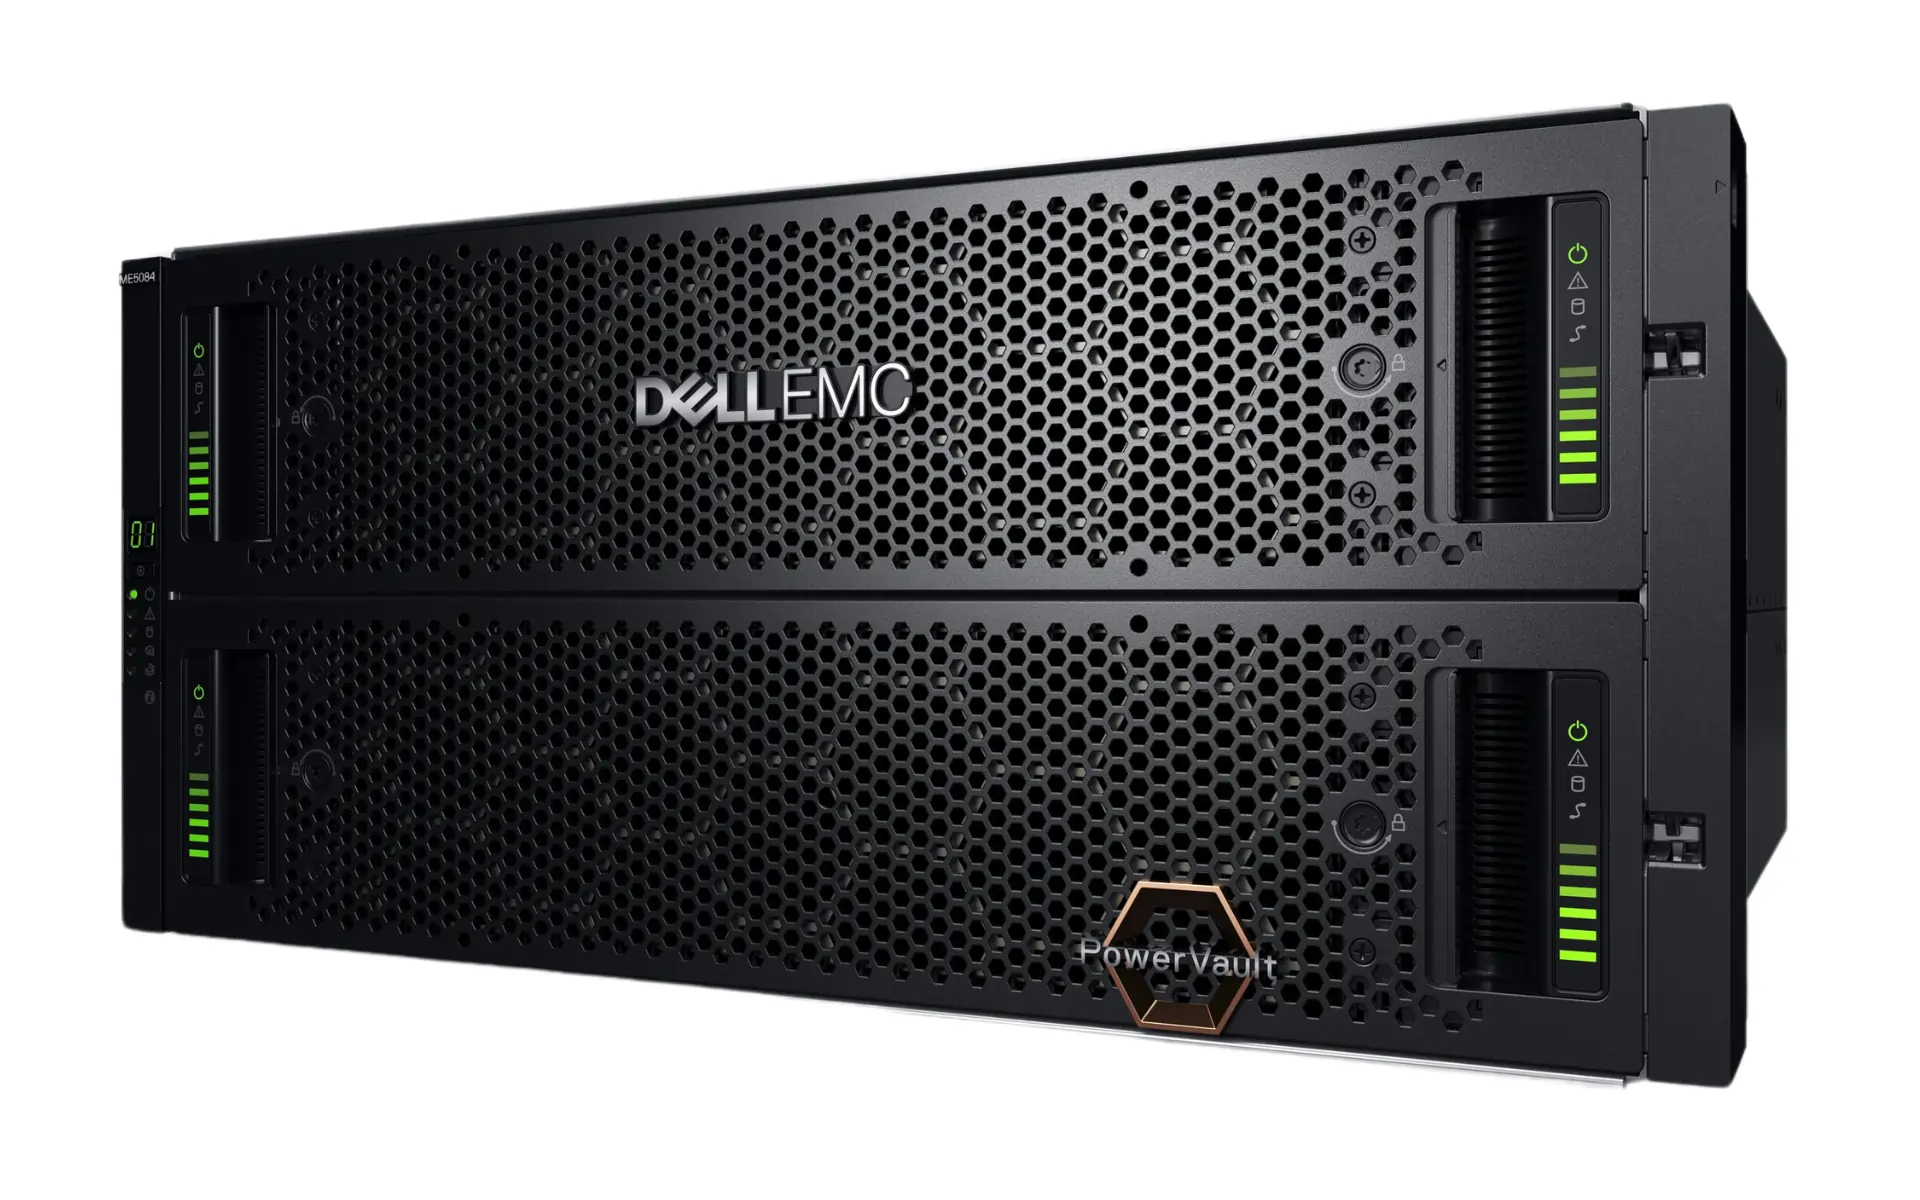 Dell EMC Power Vault SAN data Recovery